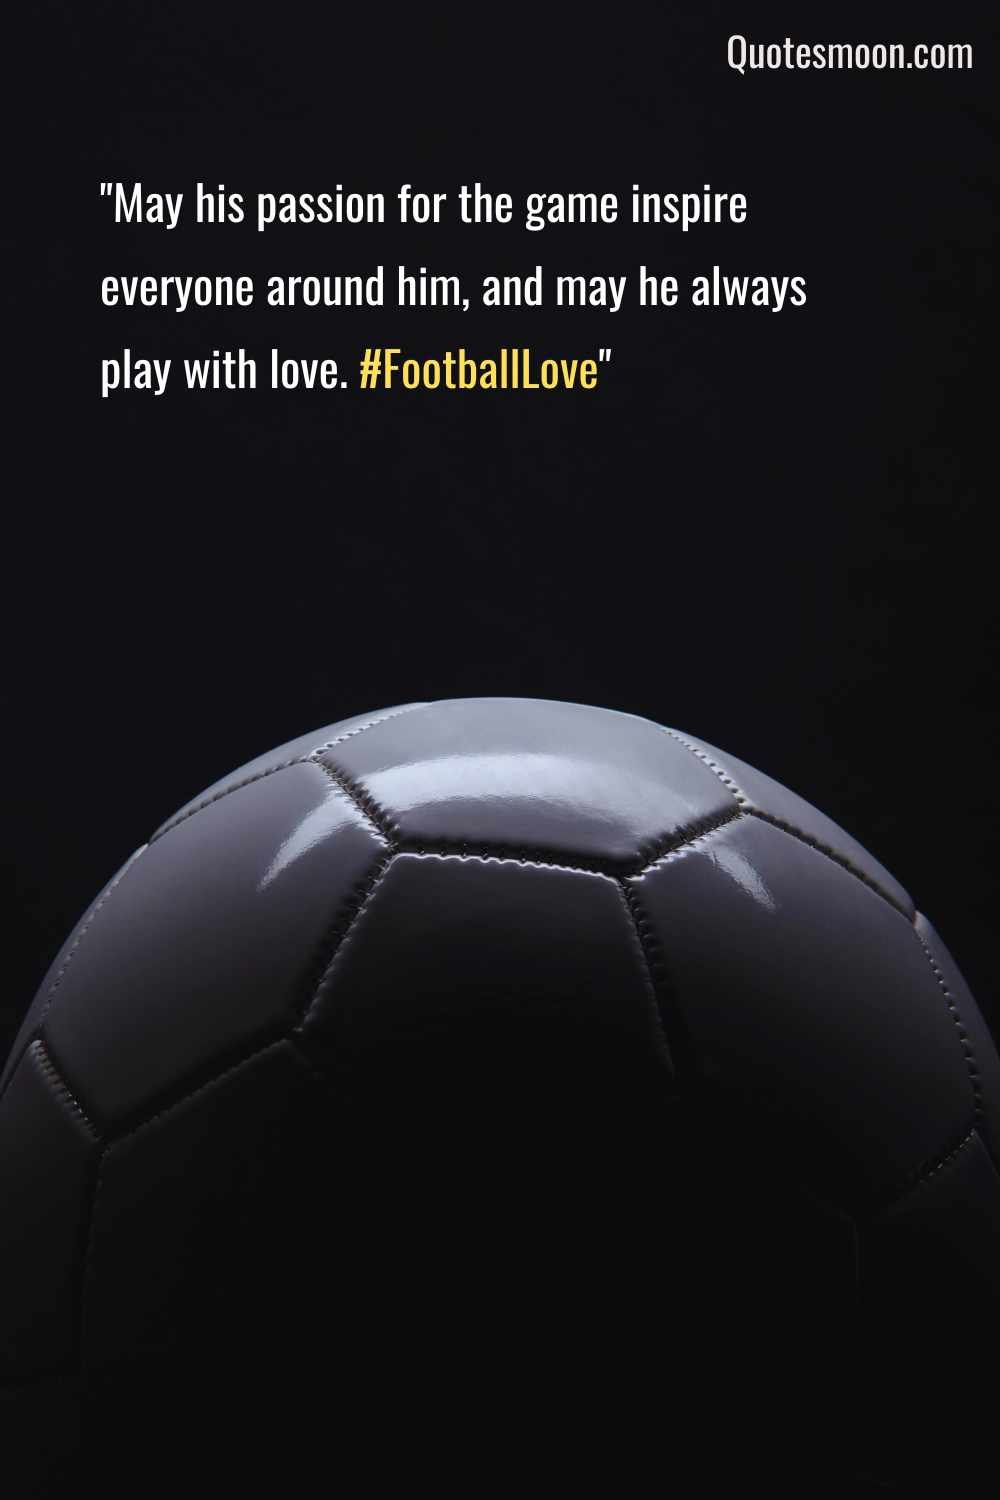 football match day prayer images